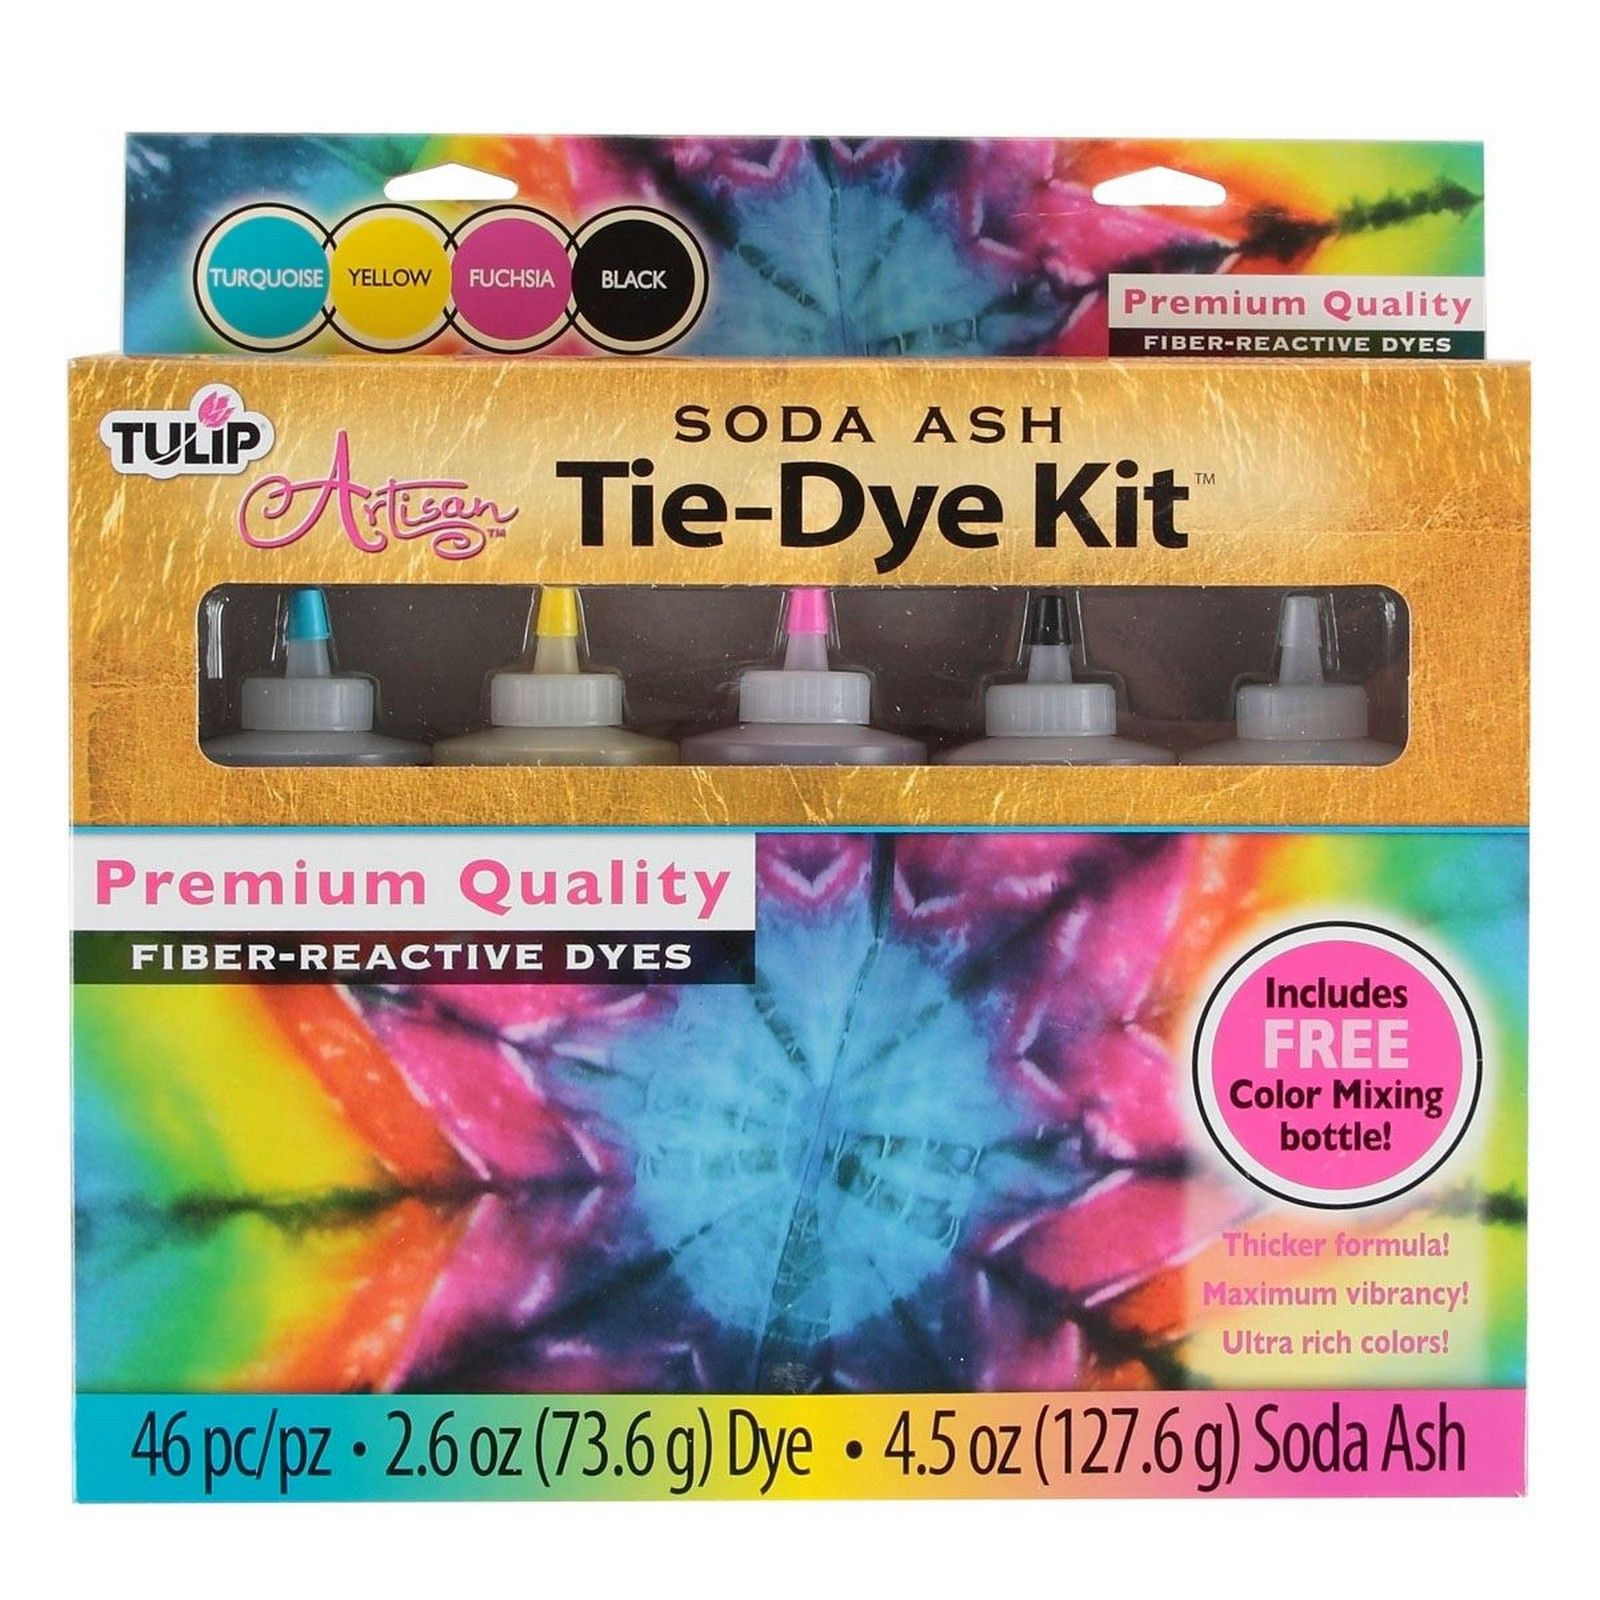 Tulip one-step tie dye • Artisan soda ash tie dye kit